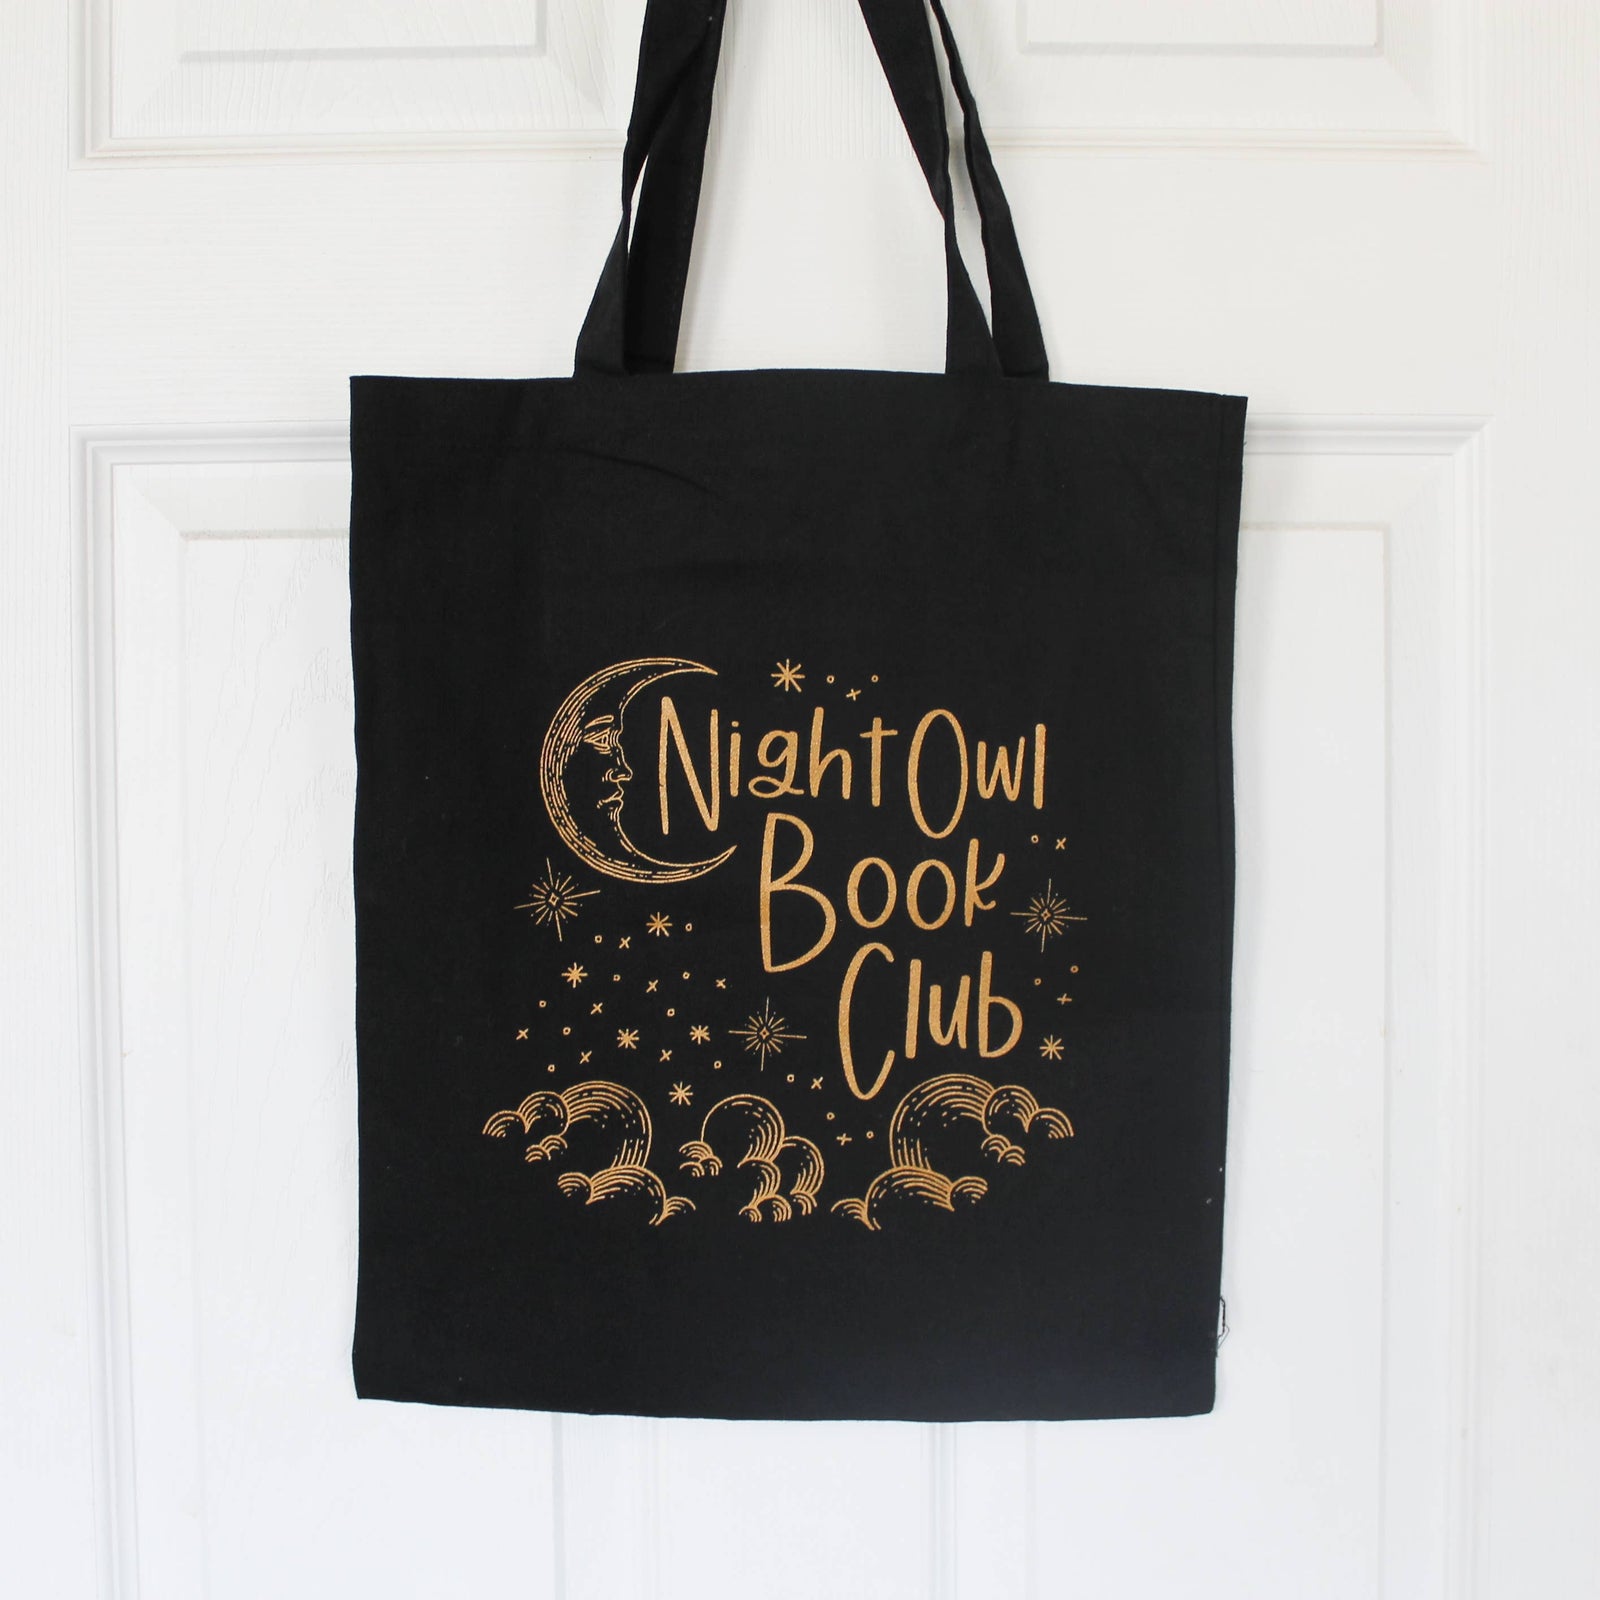 Night Owl Book Club tote bag